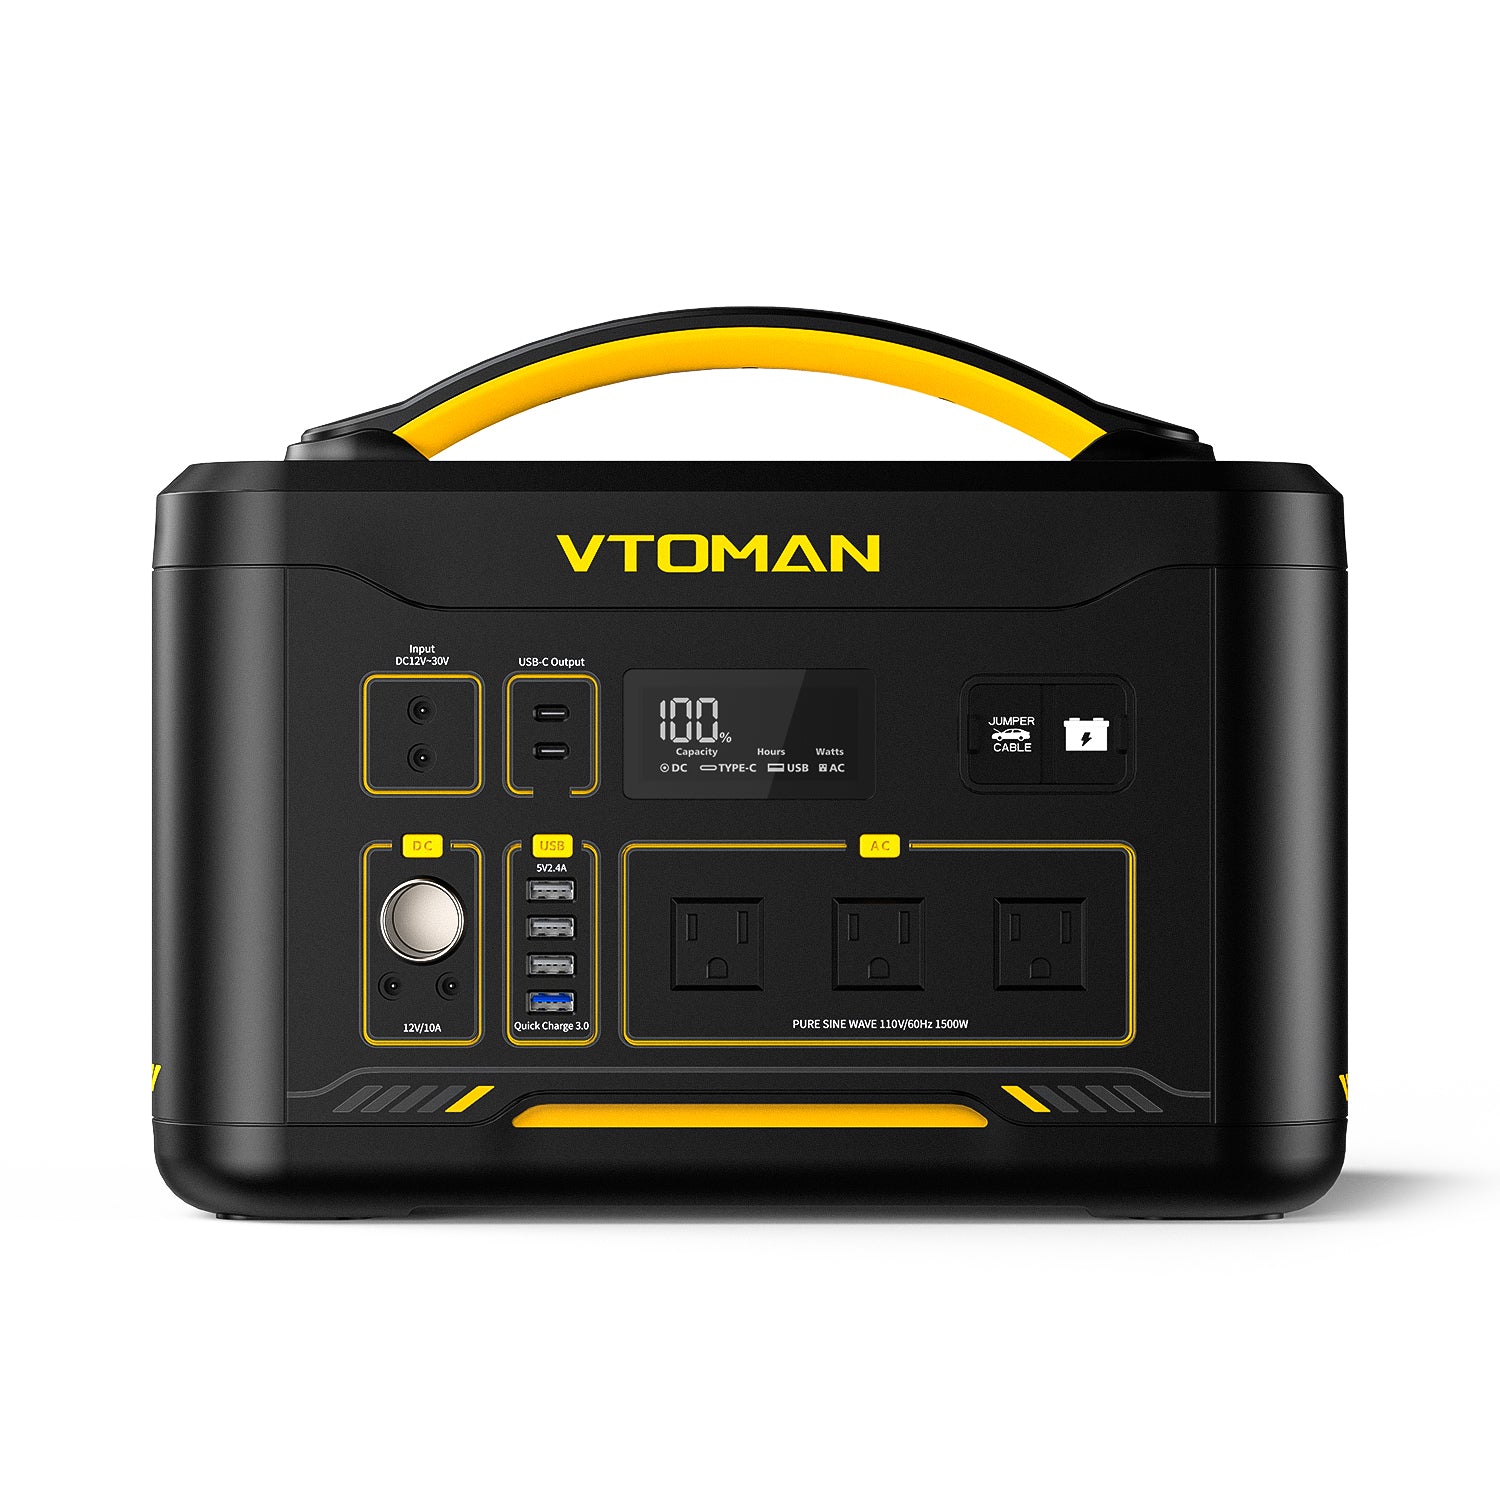 VTOMAN Jump 1500 features LiFePO4 batteries